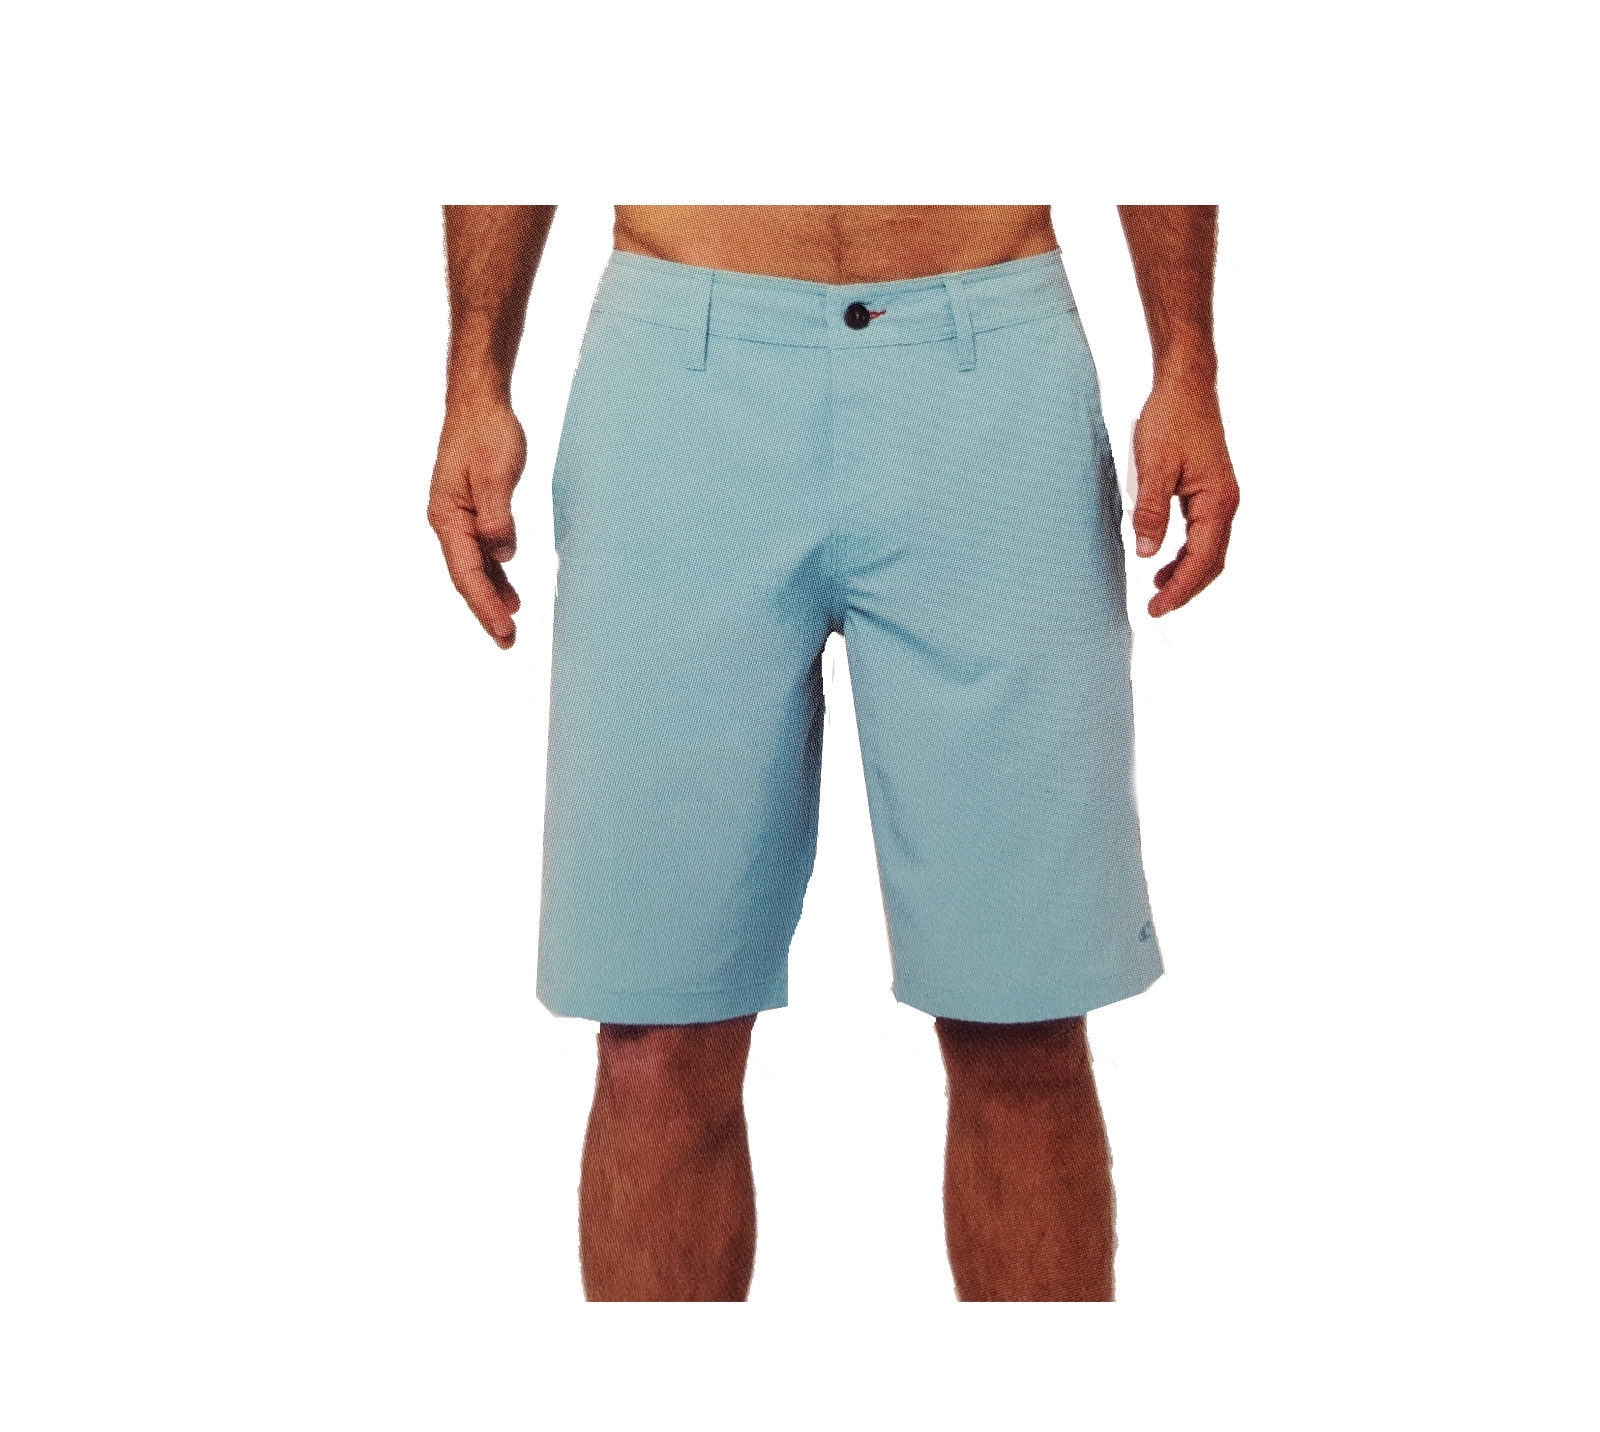 New Men's O'Neill Hybrid Quick Dry Shorts Blue size 40